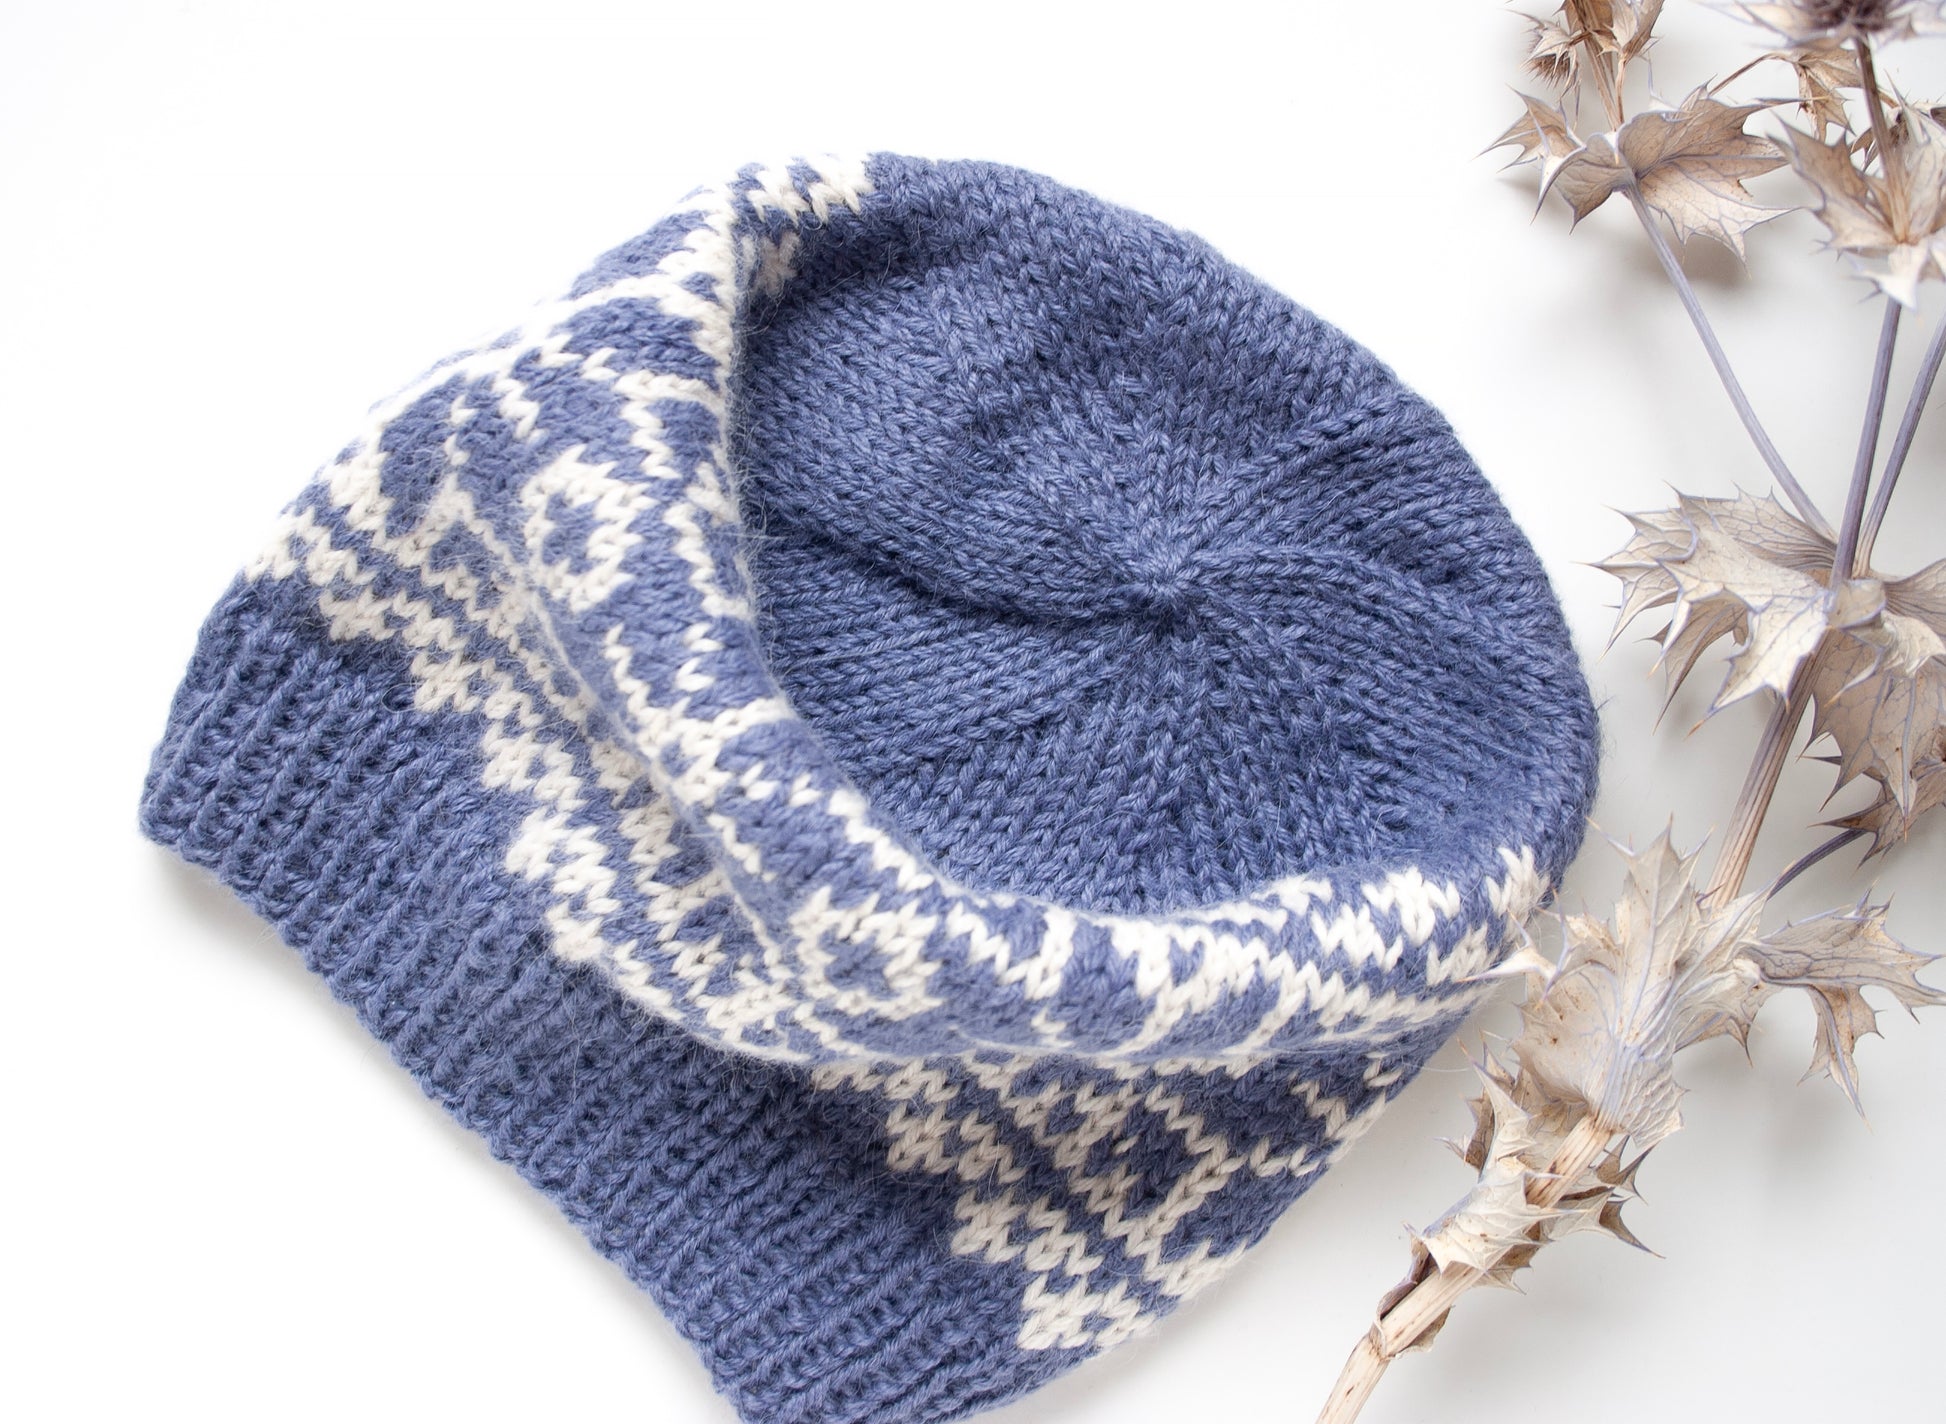 blue and white alpaca wool hand-knitted Fair Isle beanie hat in snowflake knitting pattern